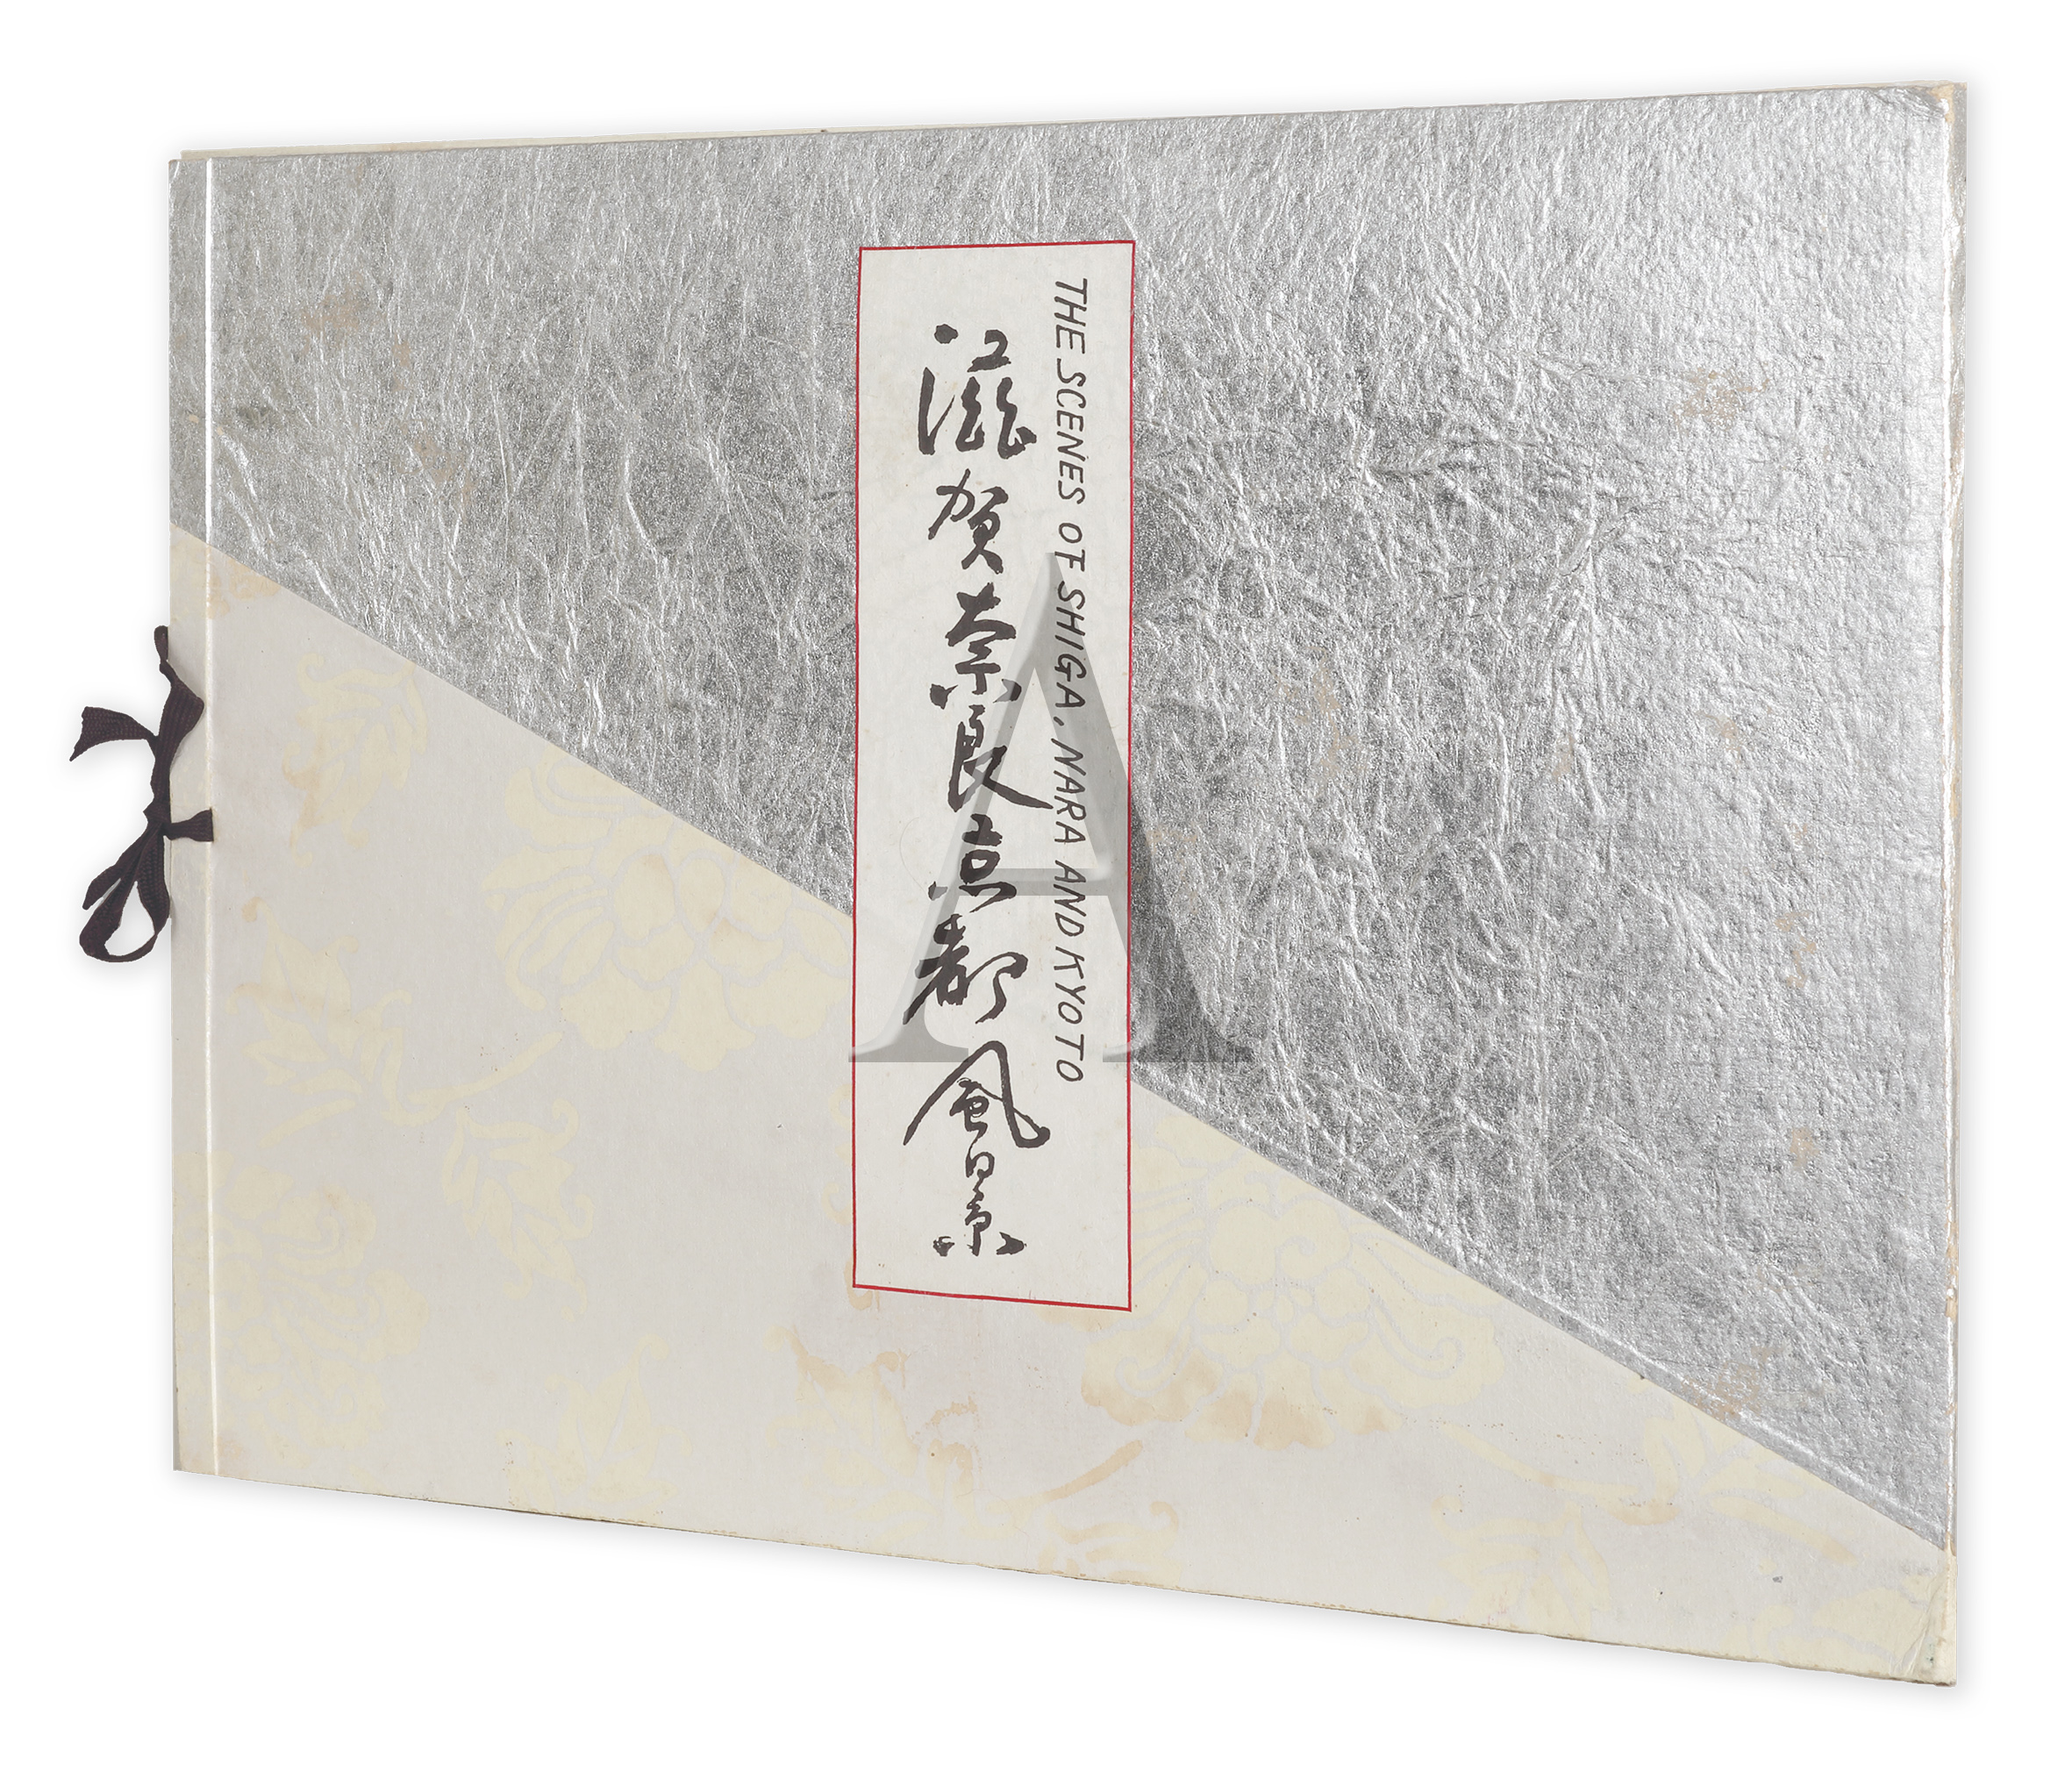 The Scenes of Shiga, Nara and Kyoto - Vintage Book from 1955